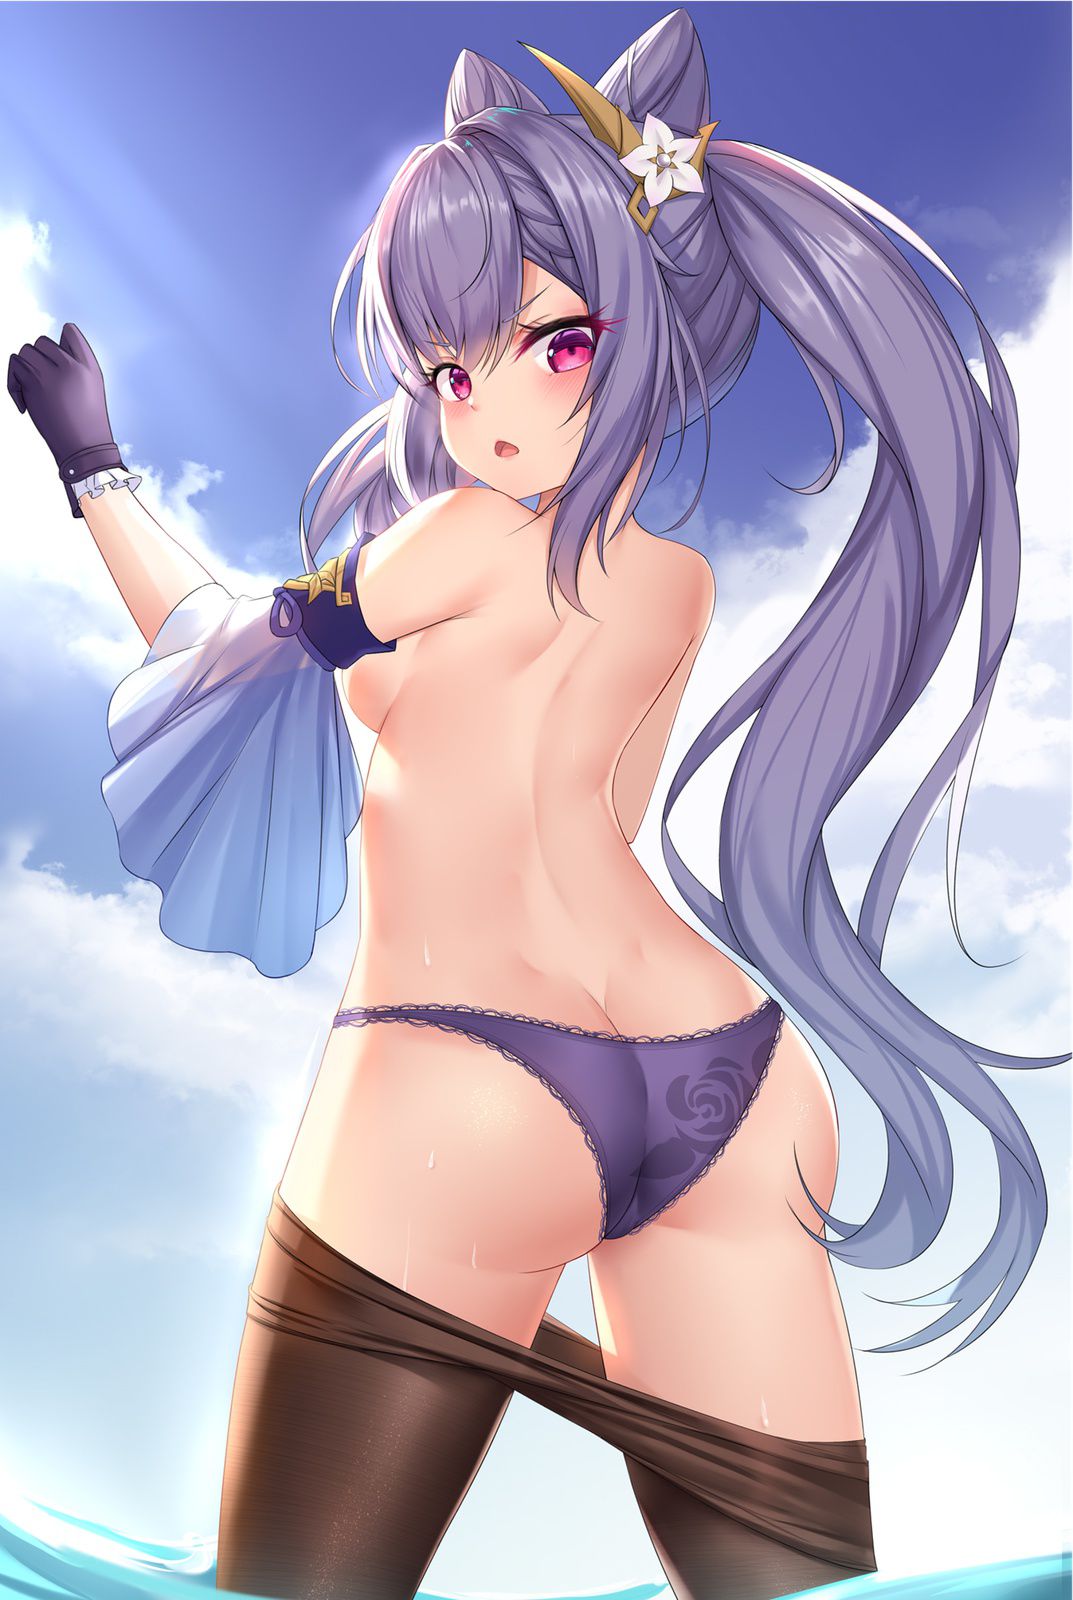 [Haragami] black stockings is erotic Tokiharu-chan's image! Part 2 33